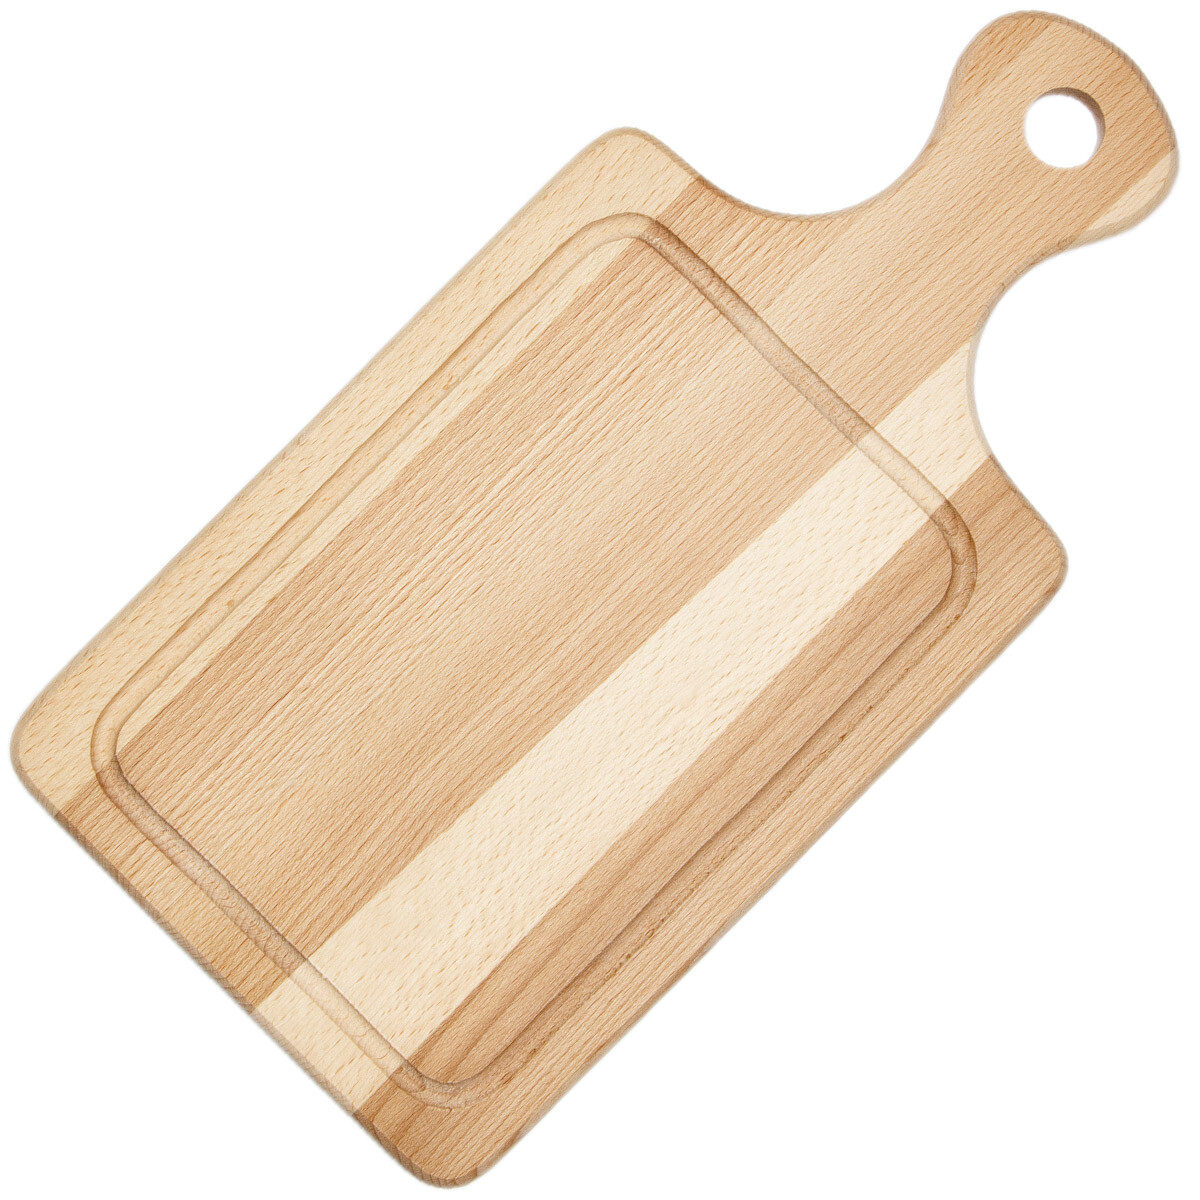 cutting board in kitchen